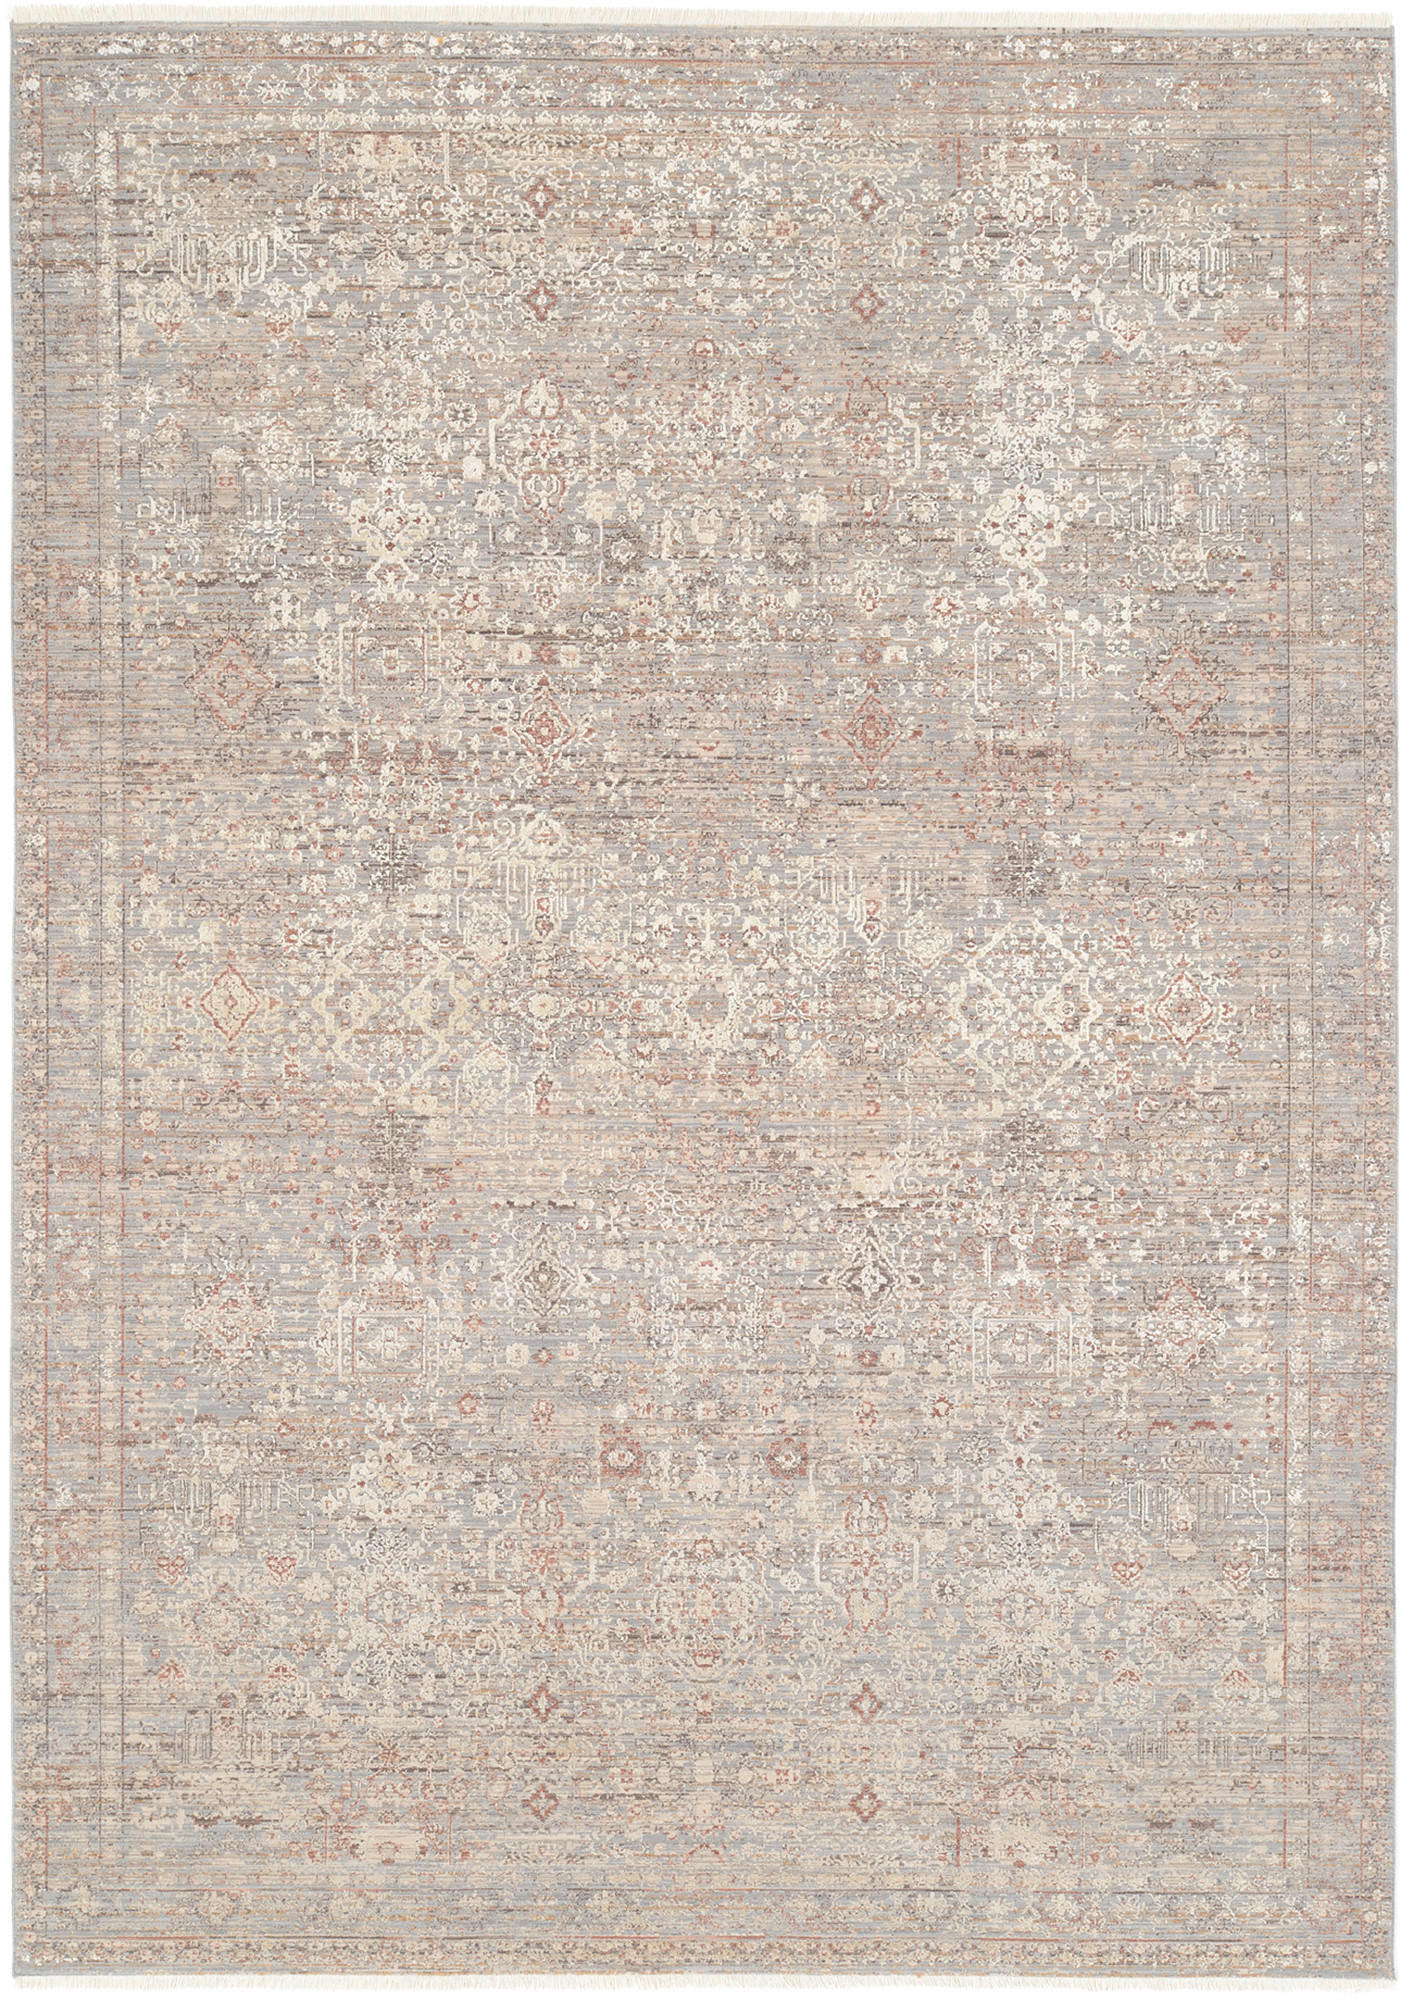 WEBTEPPICH 80/150 cm Tinto Grande  - Gelb, Design, Textil (80/150cm) - Dieter Knoll